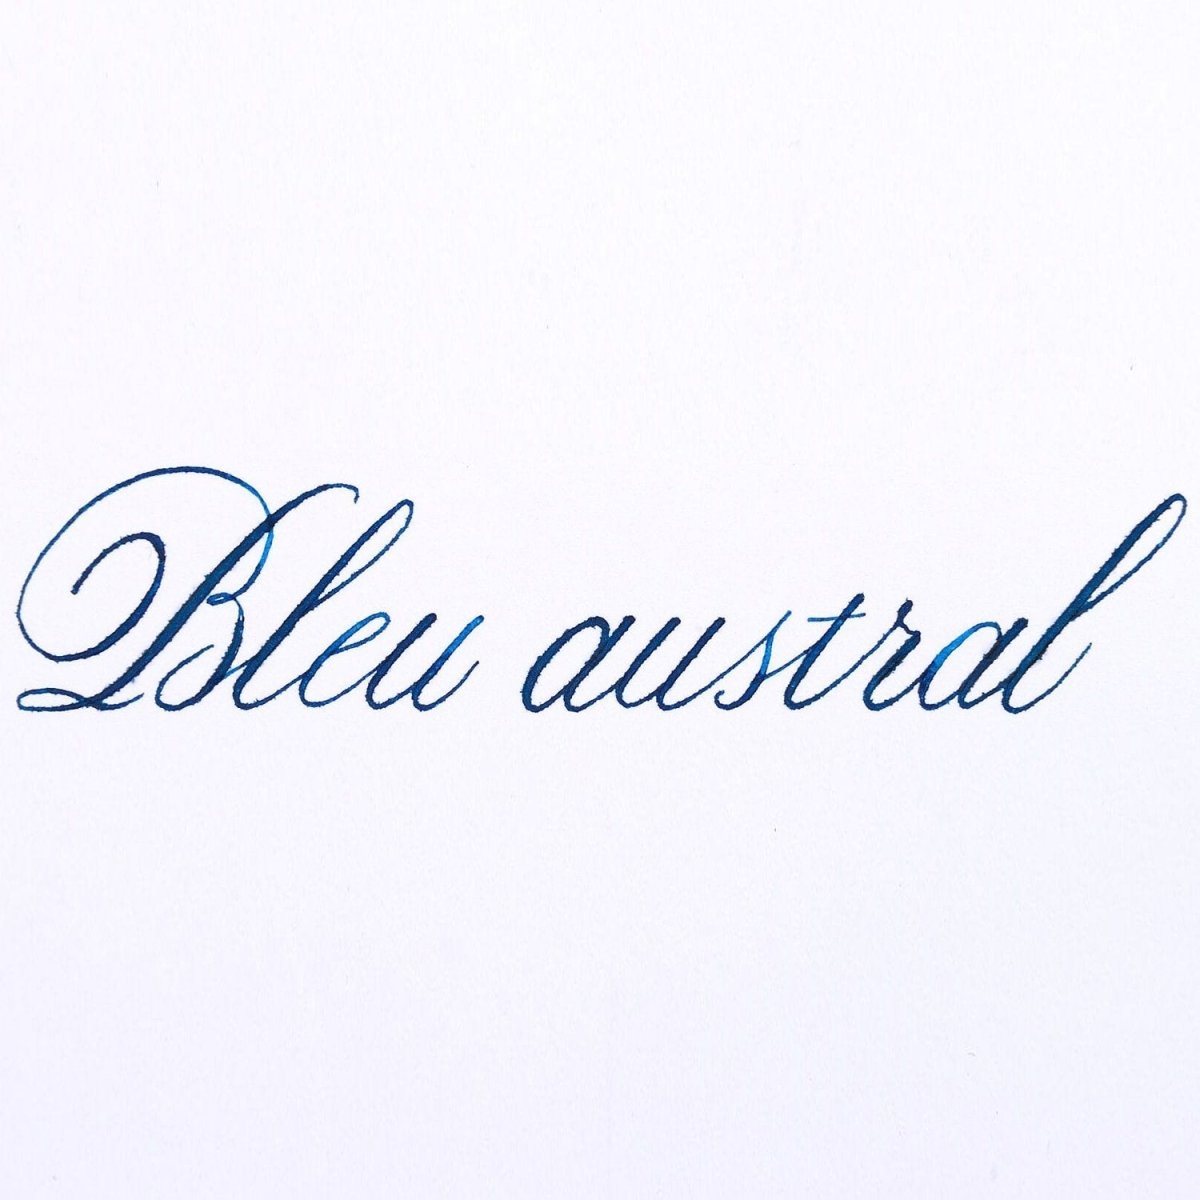 Jacques Herbin Essentielles Ink Bottle (Bleu Austral - 50 ML) 13116JT - SCOOBOO - JHB_INKBTL_BLUAUS_50ML_13116JT - Ink Bottle